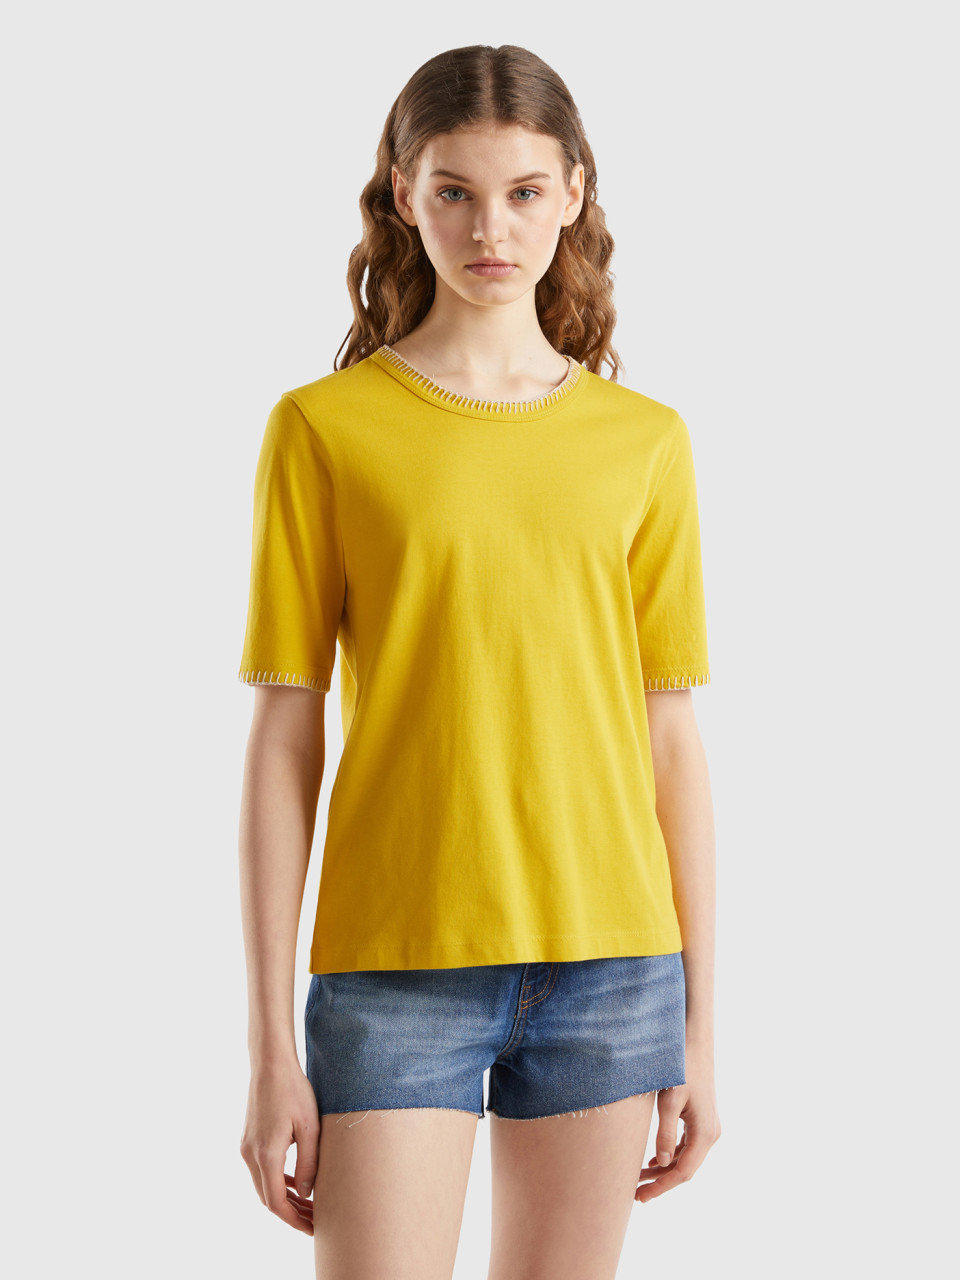 Benetton, Cotton Crew Neck T-shirt, Yellow, Women